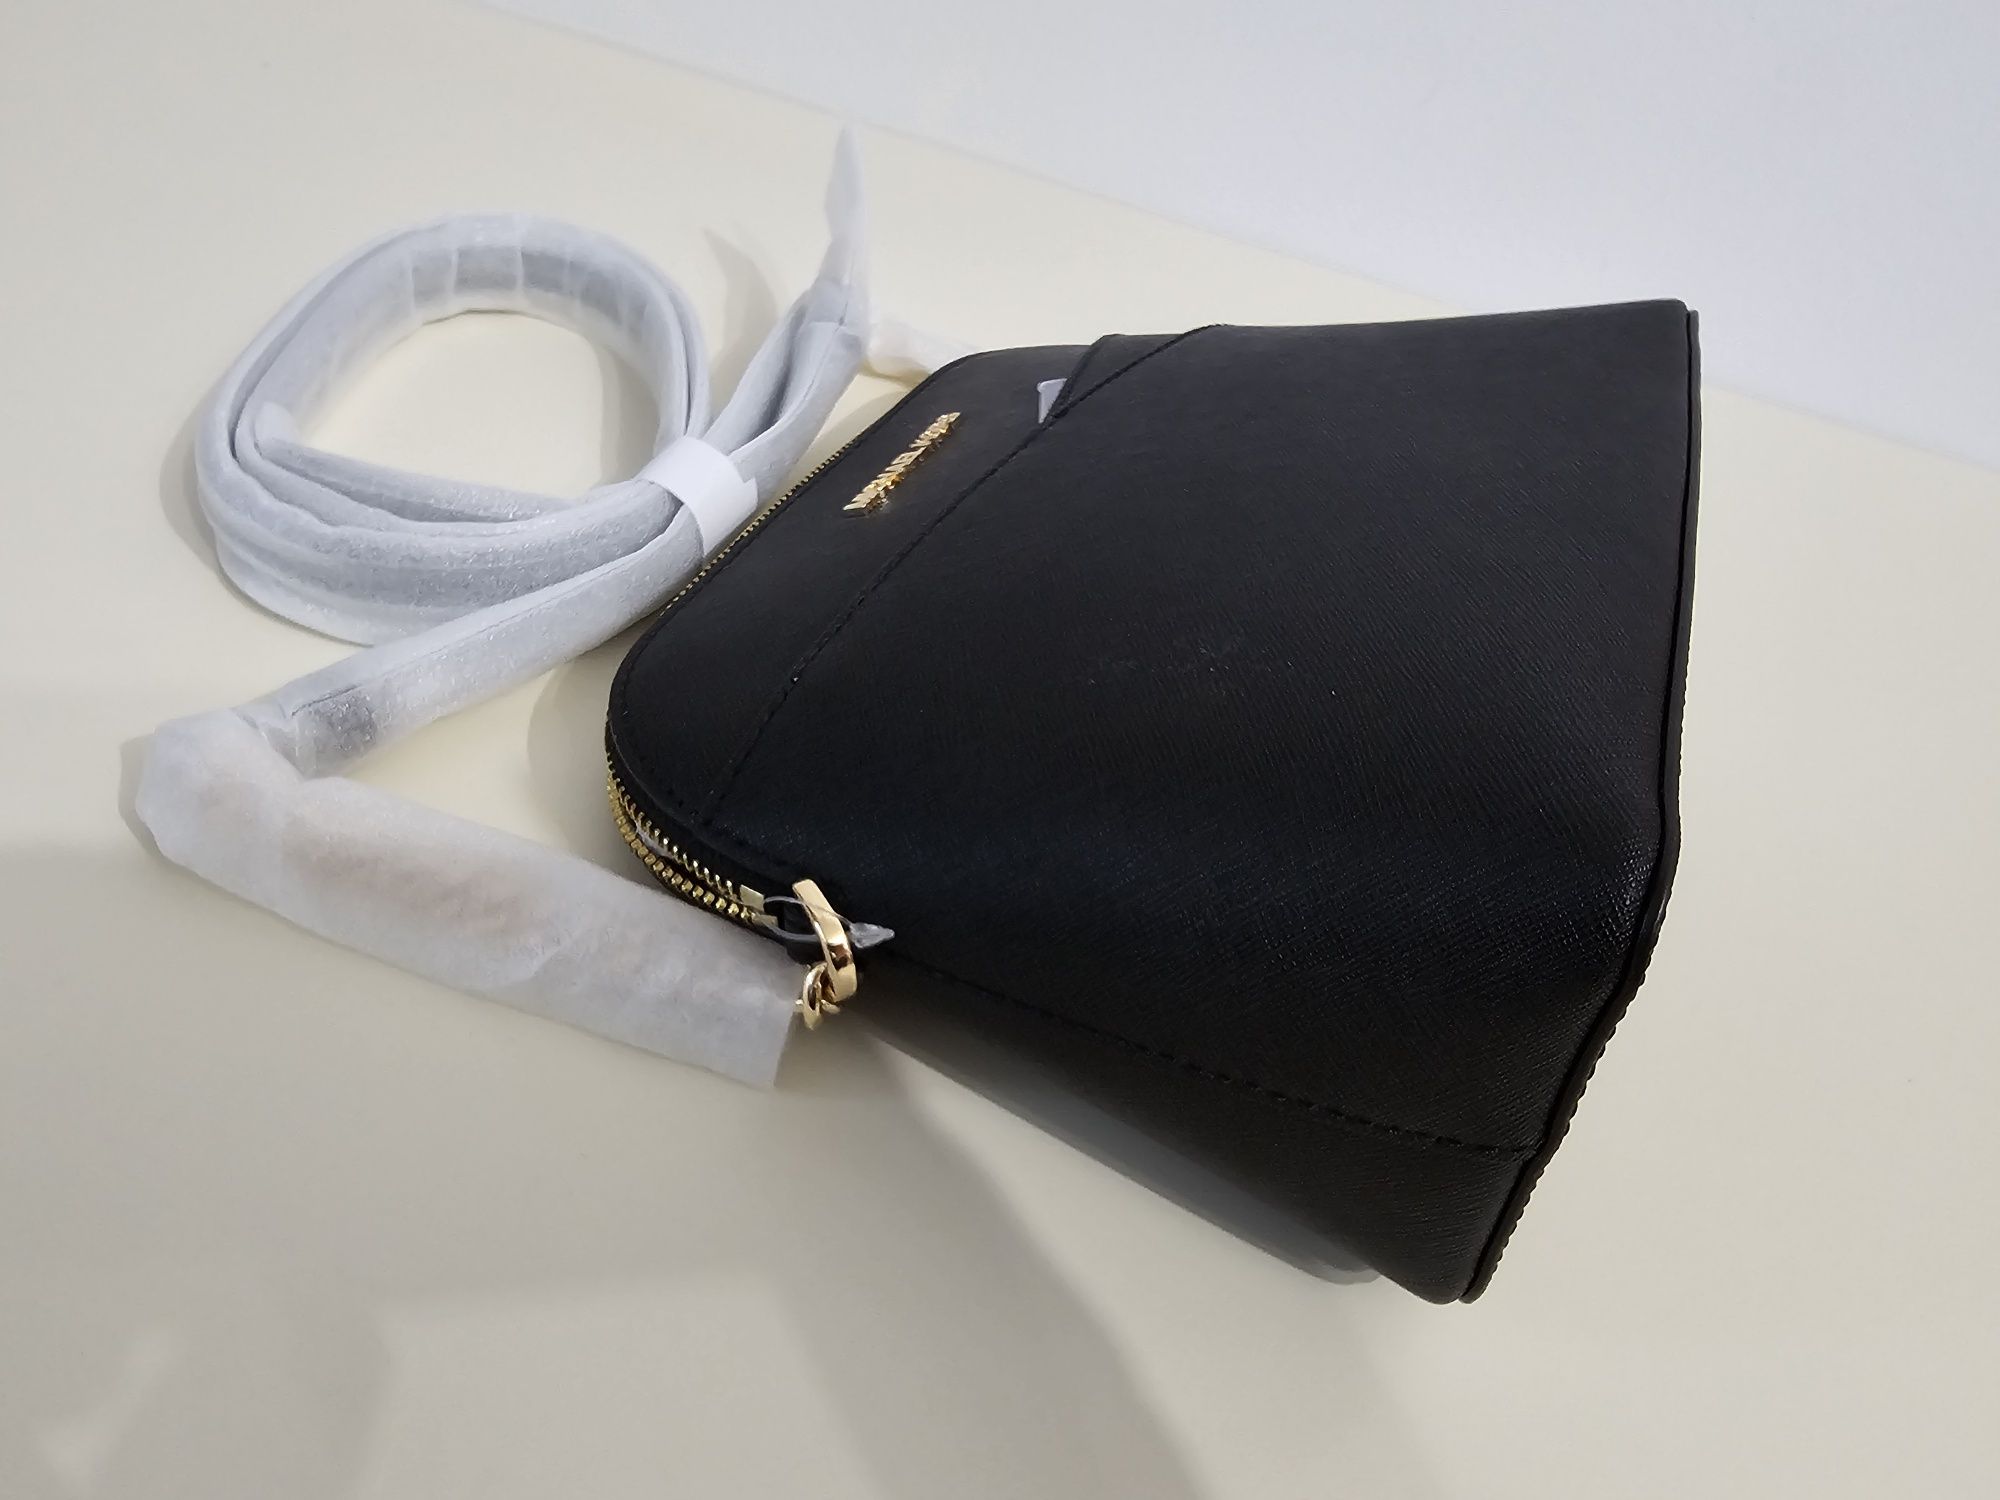 Michael Kors geanta model Jet set travel leather